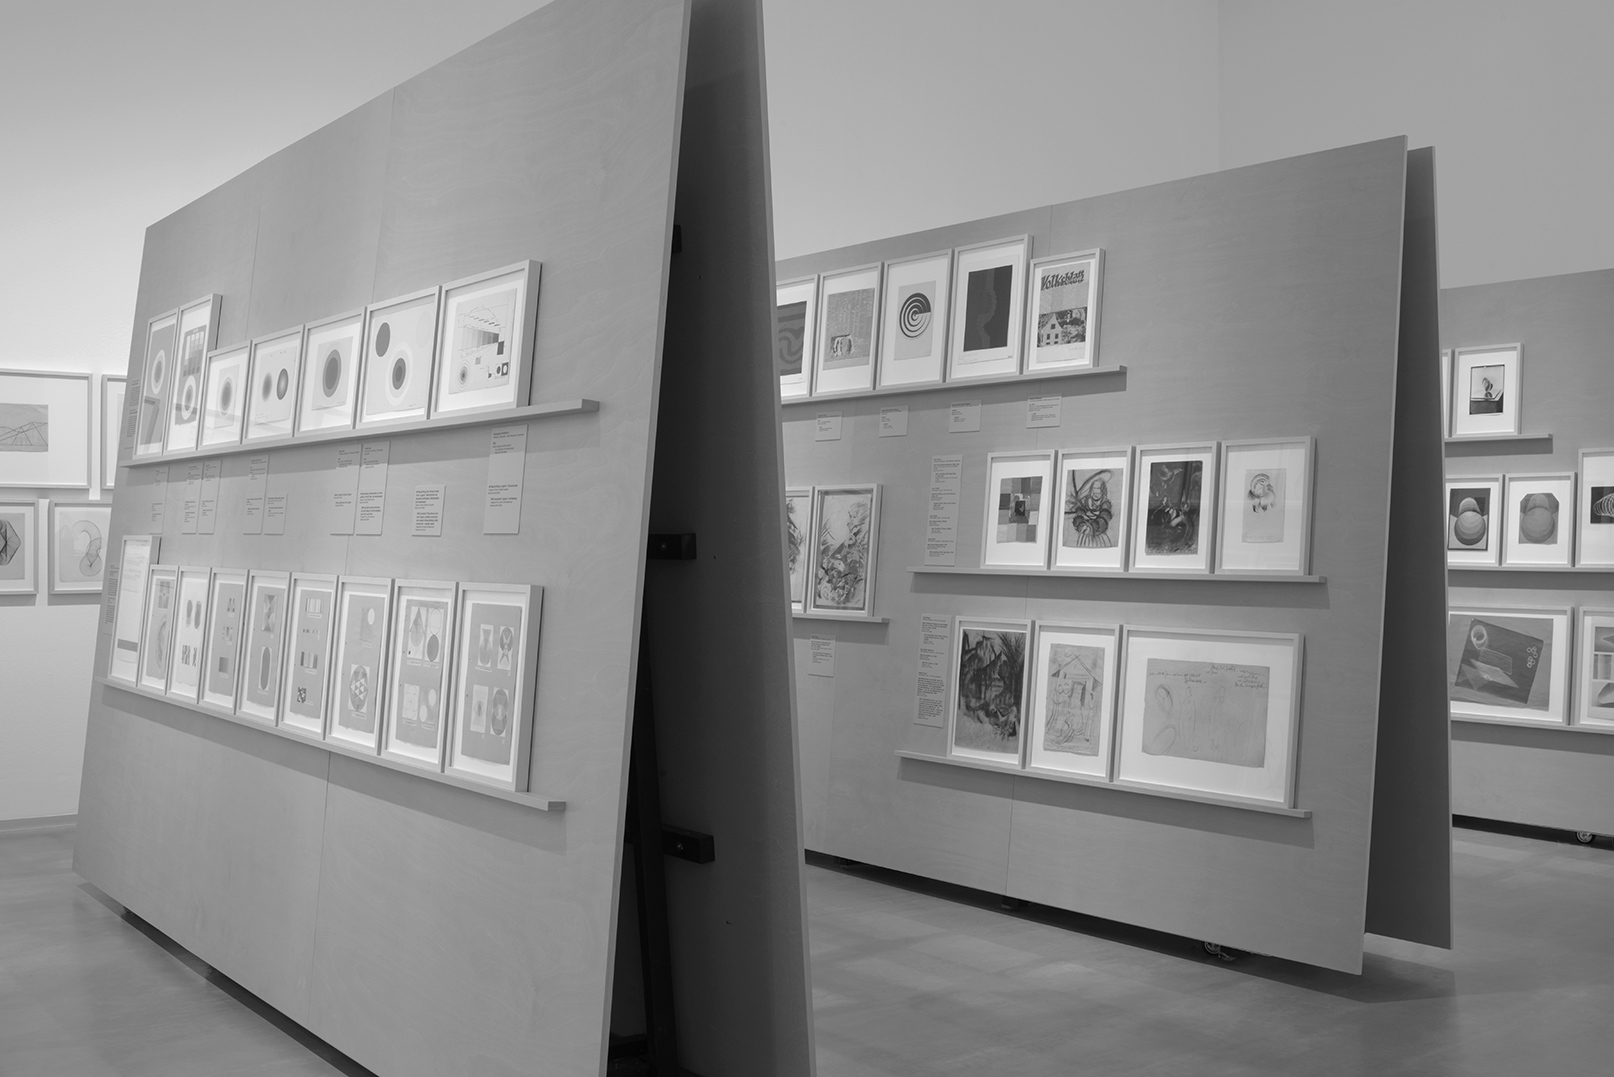 julia marquardt original bauhaus bauhaus-archiv berlin berlinische galerie ausstellung fotos exhibition photos